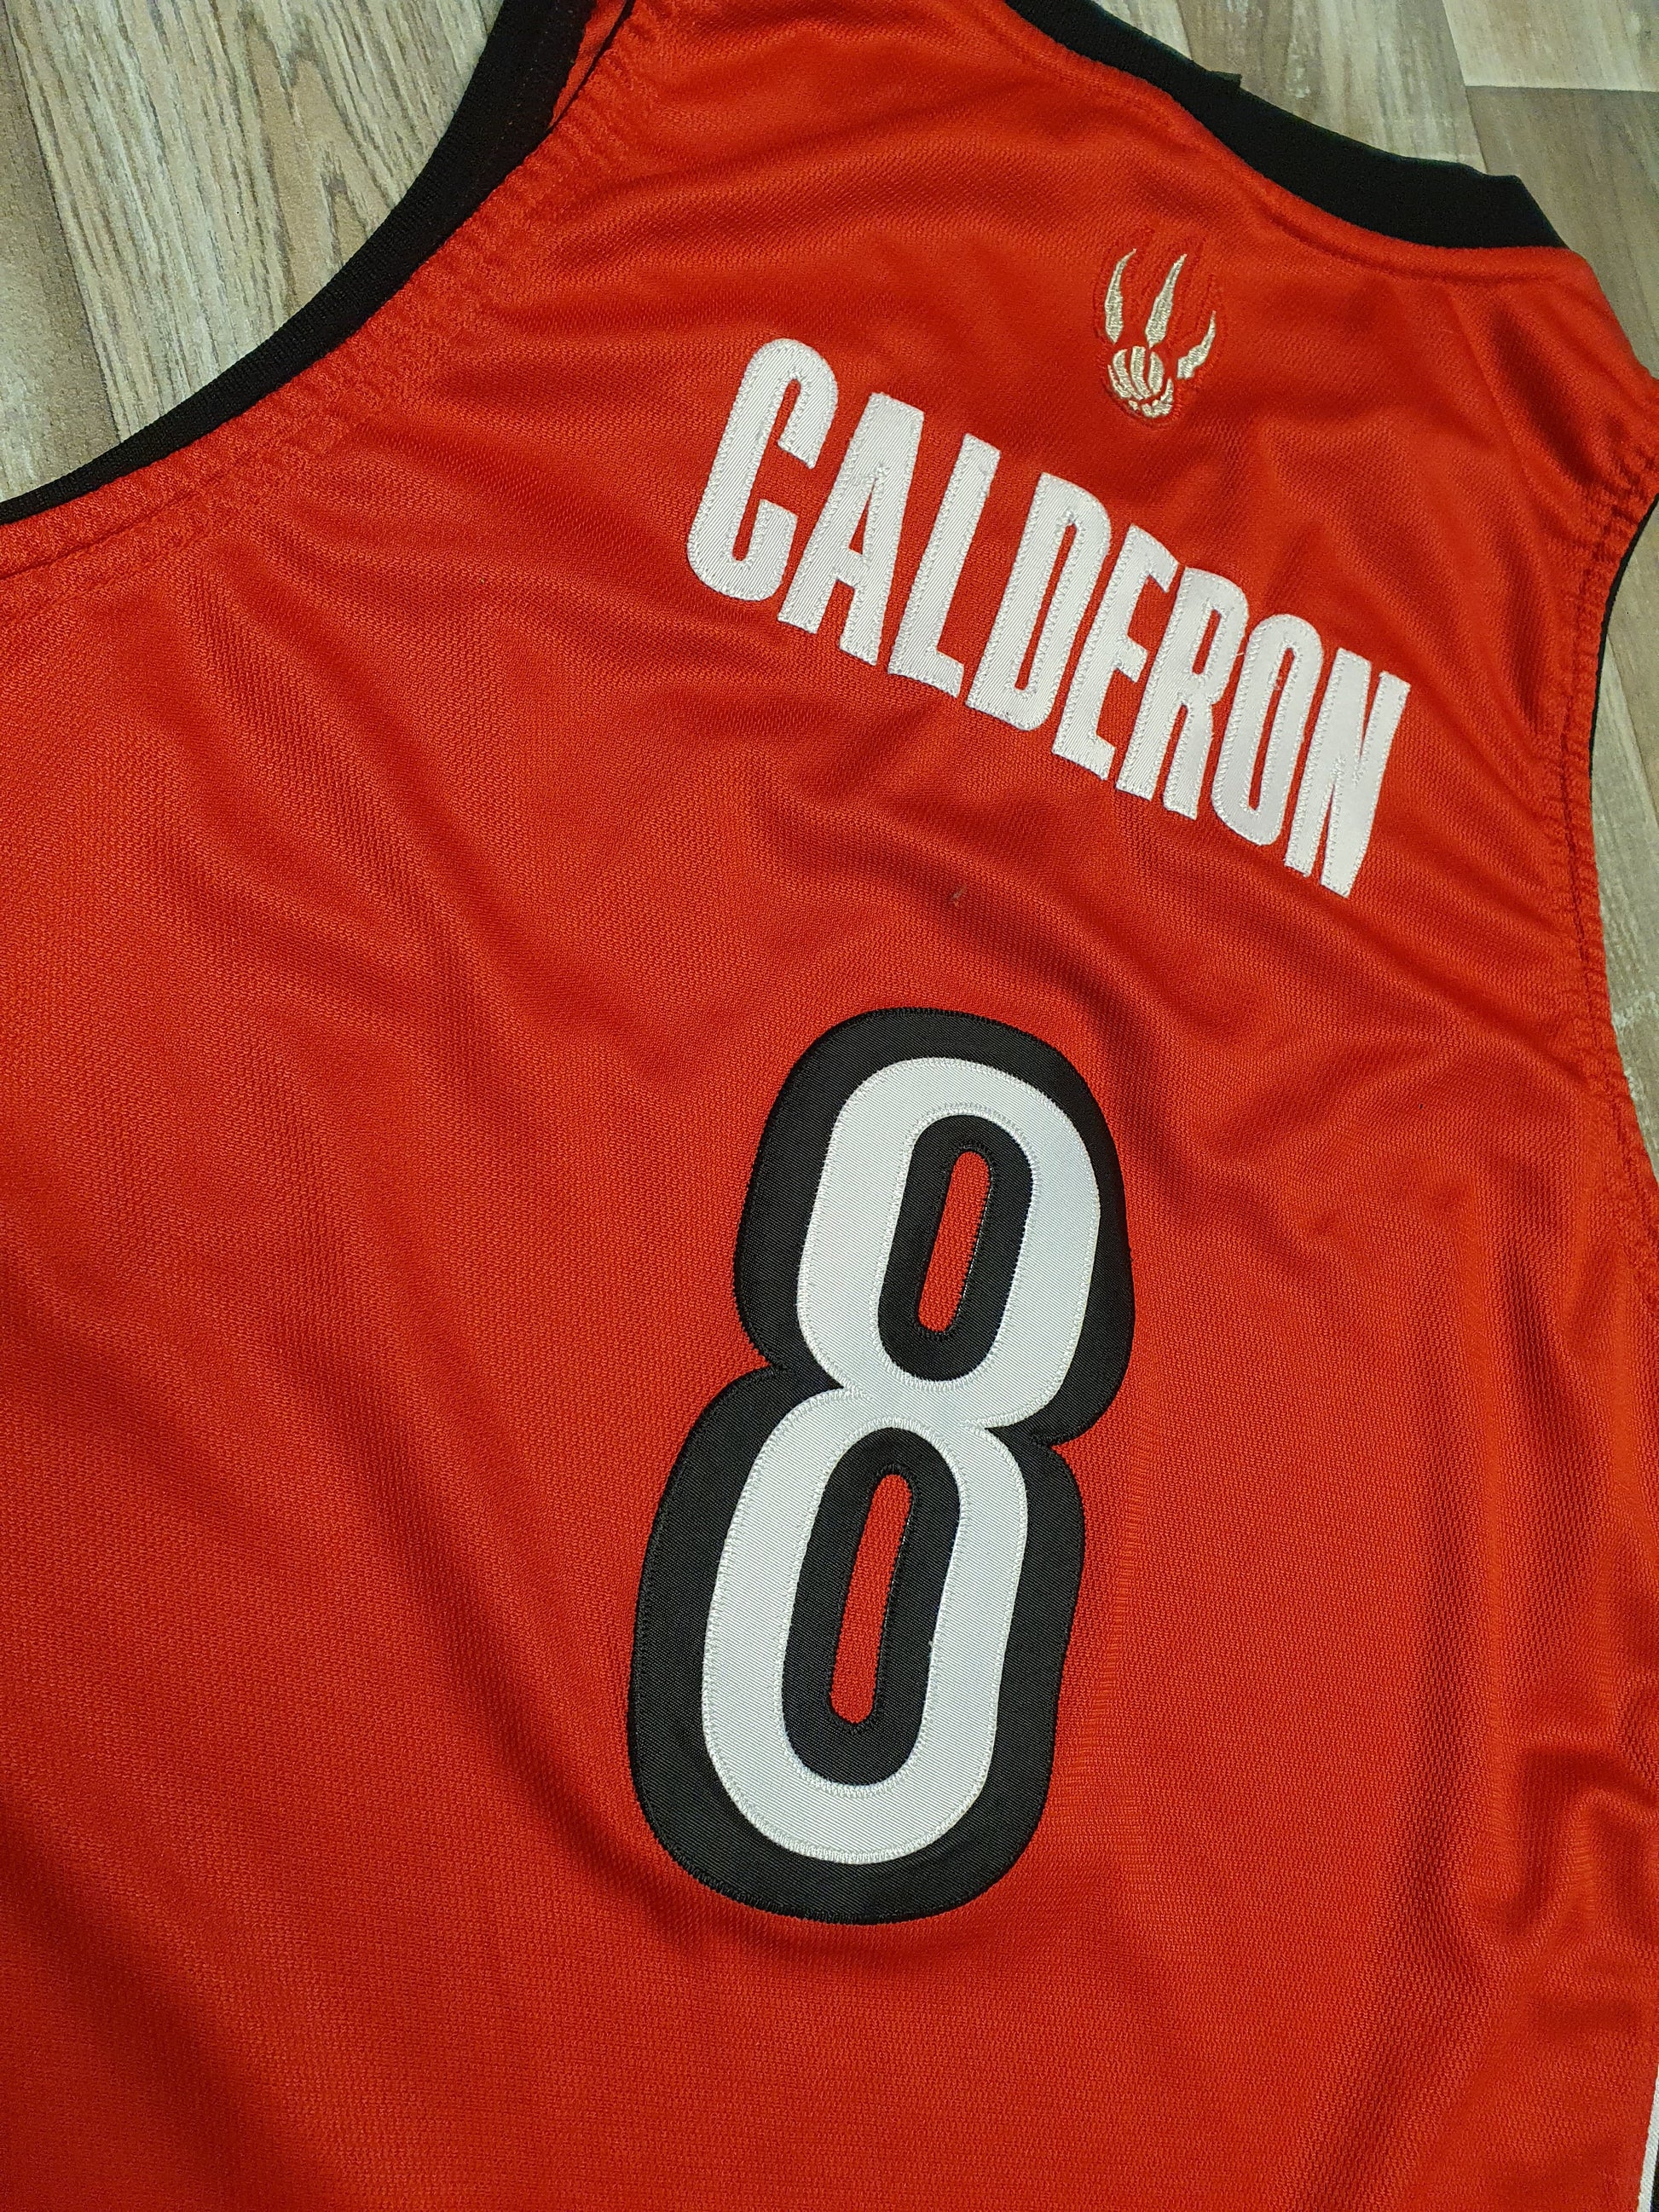 Jose Calderón Toronto Raptors Jersey Size XL